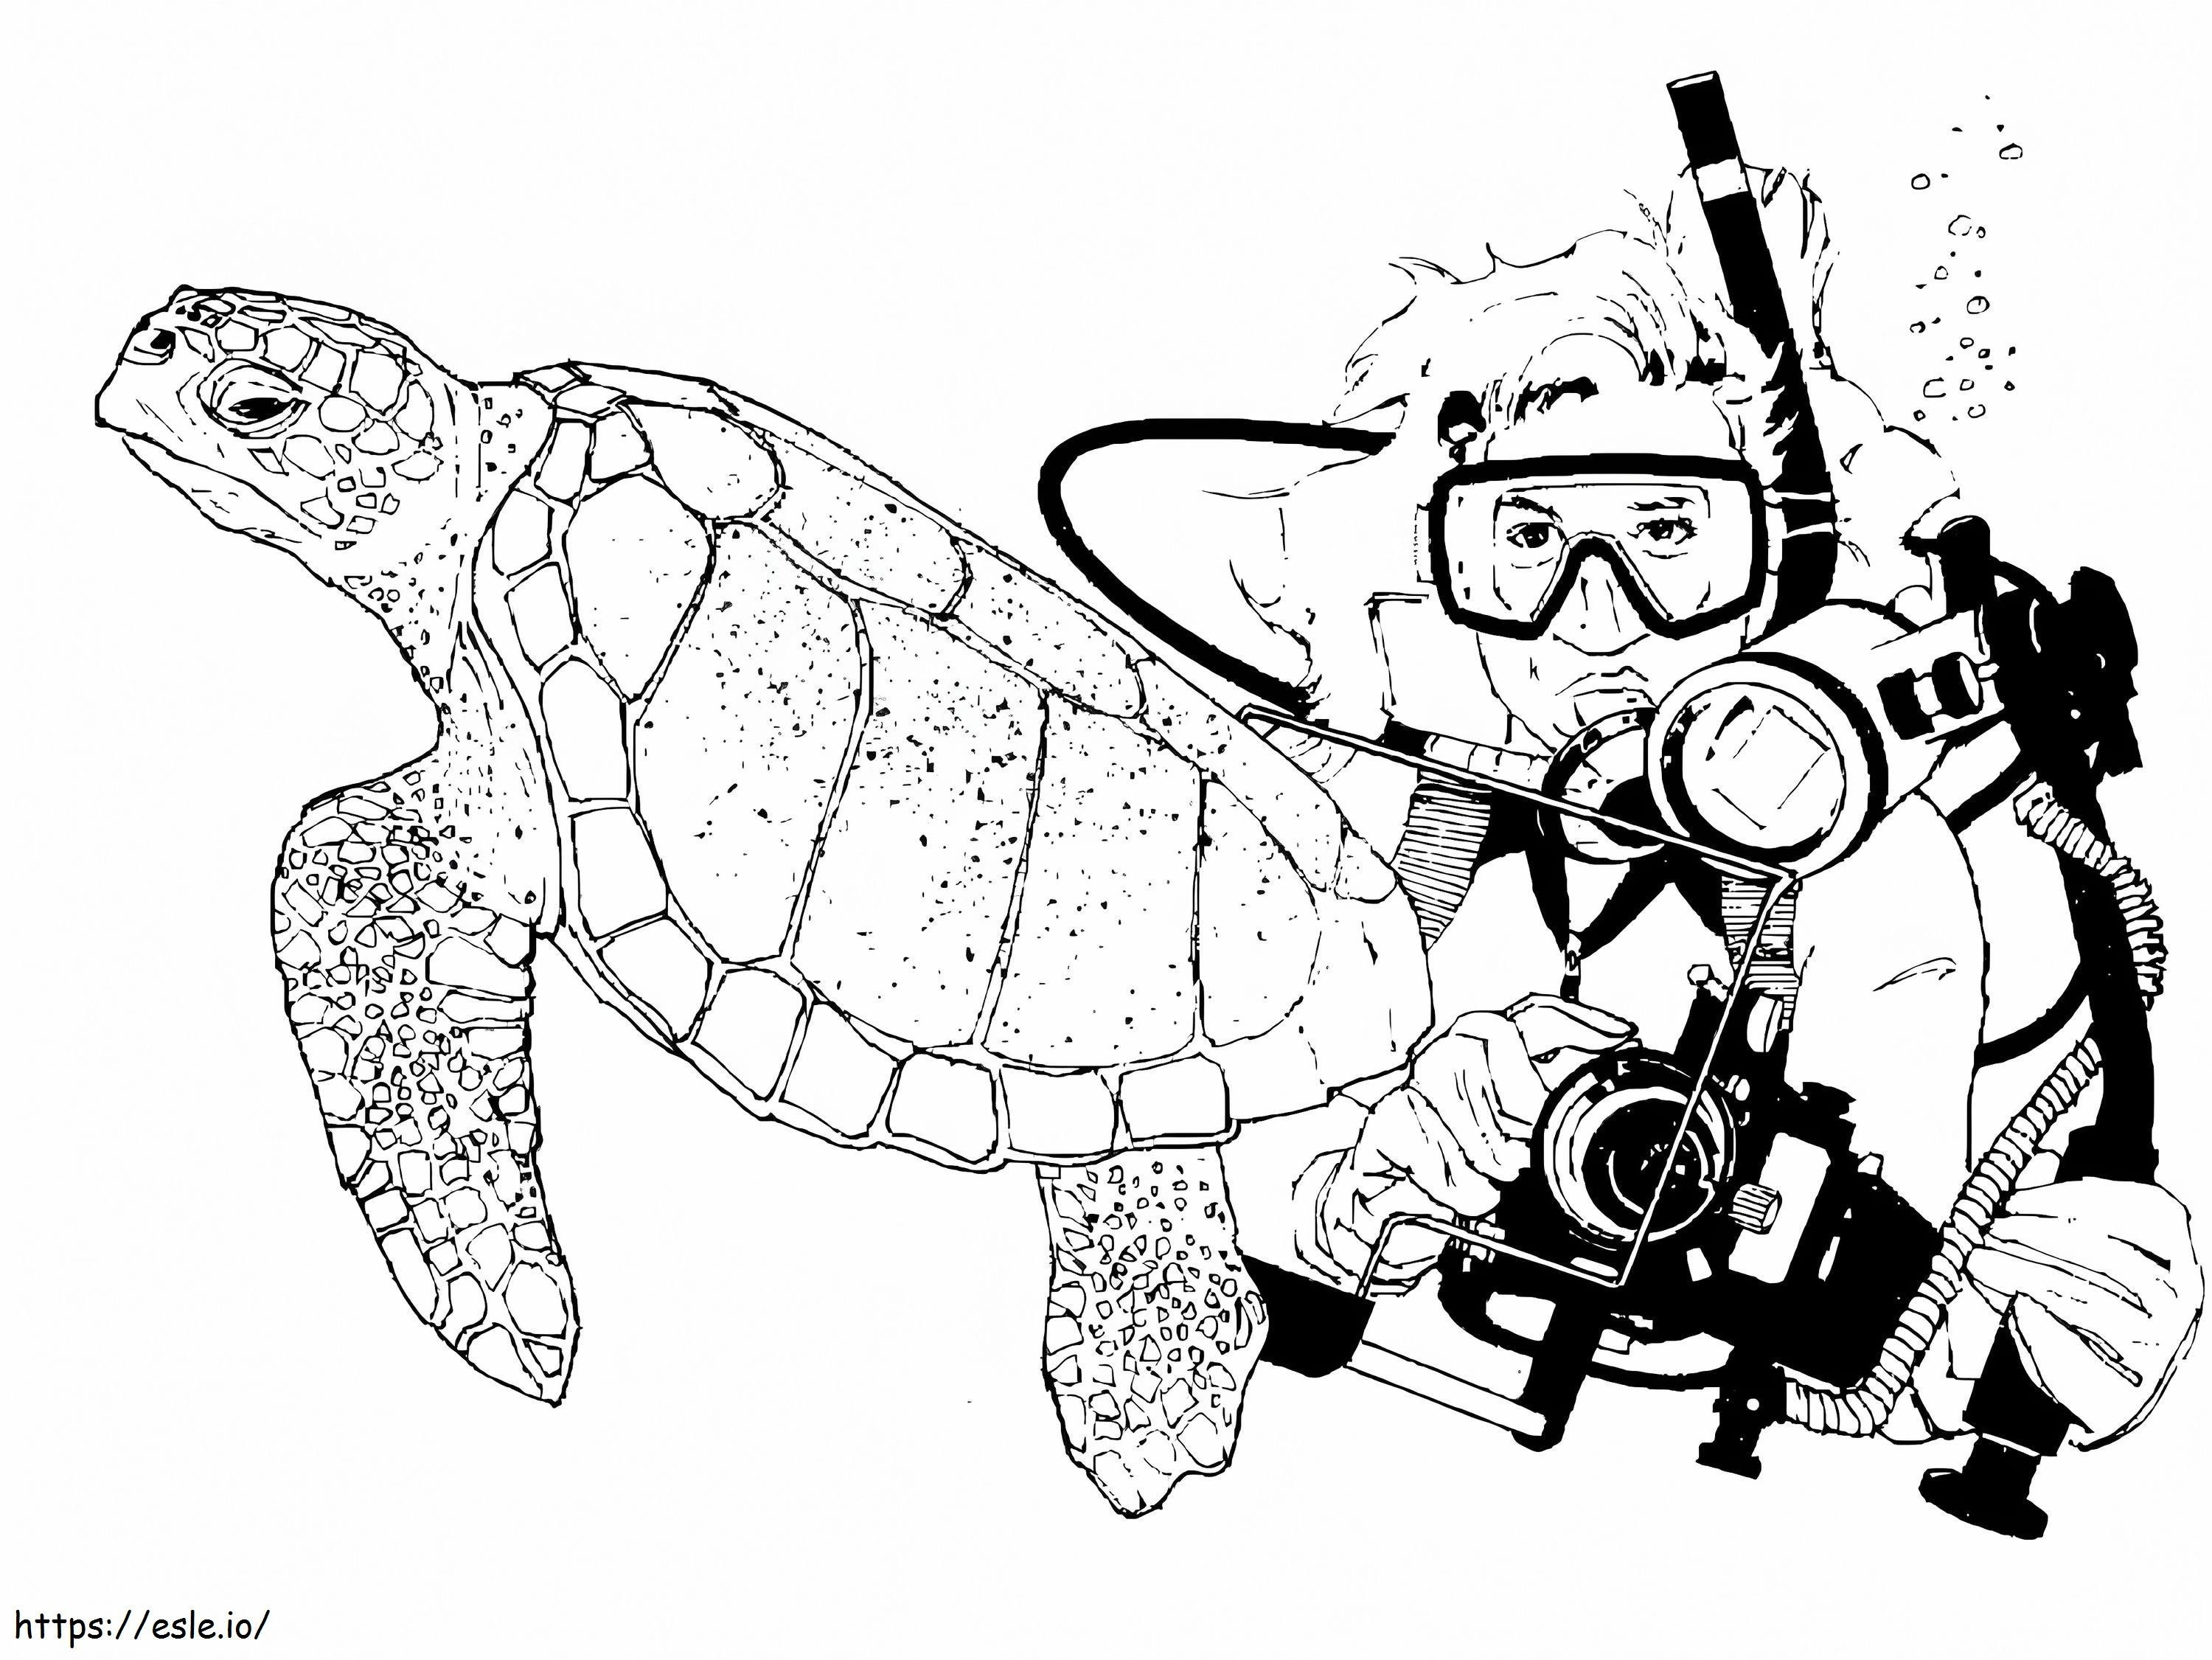 Scuba Diver And Sea Turtle coloring page